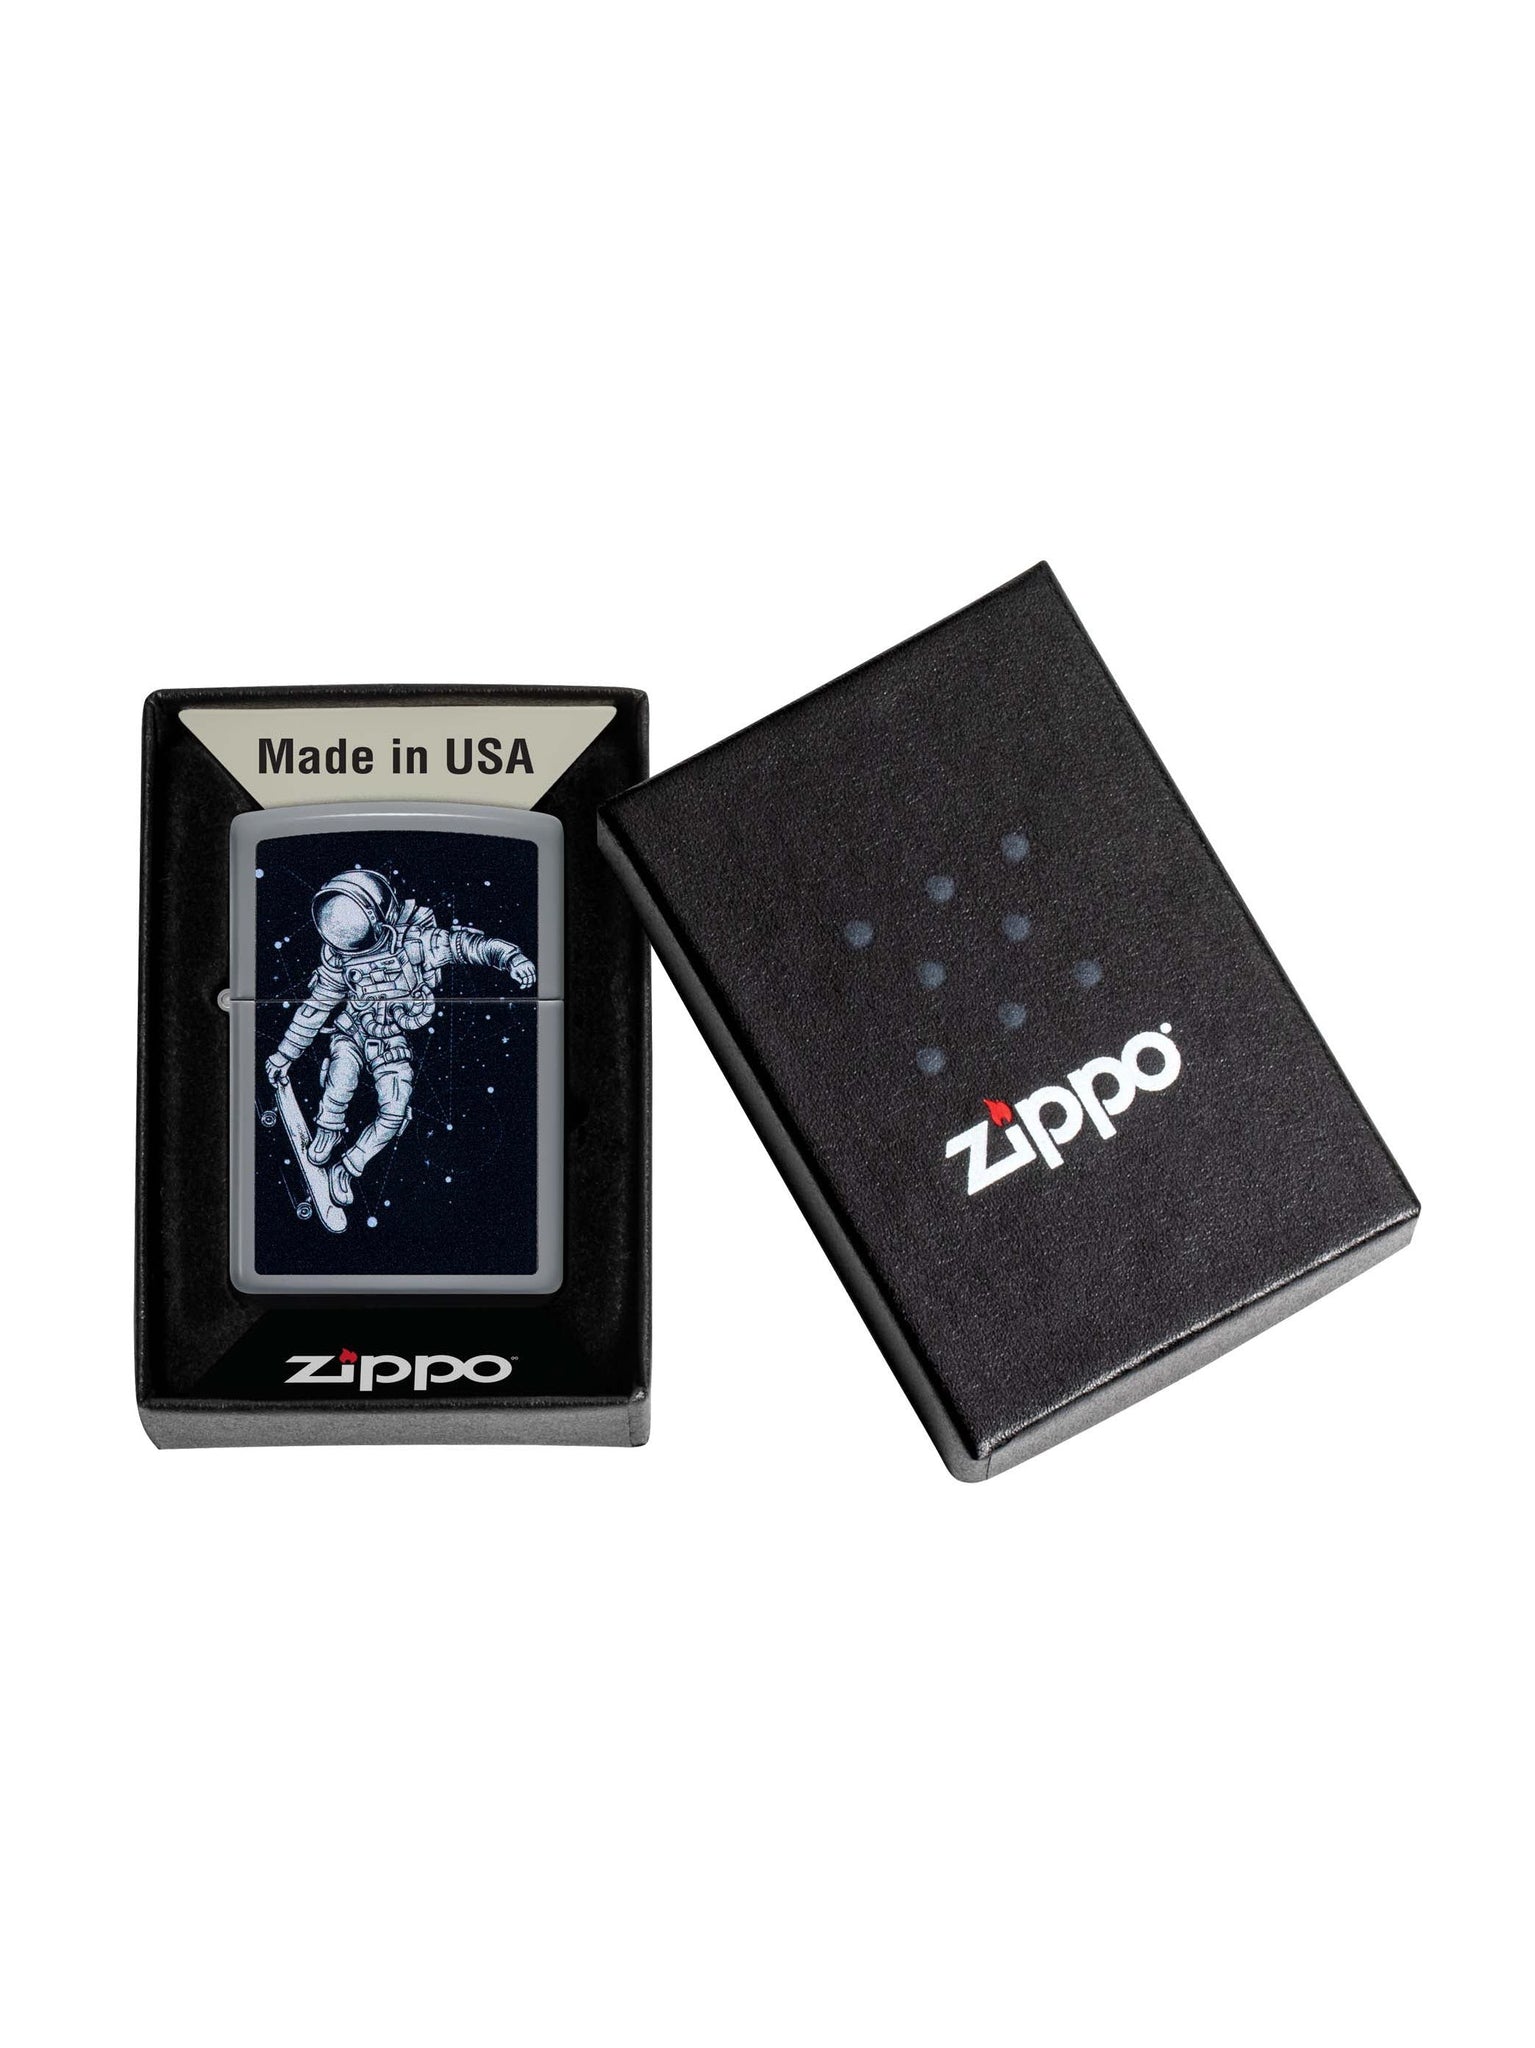 Zippo Lighter: Astronaut on Skateboard - Glat Grey 48644